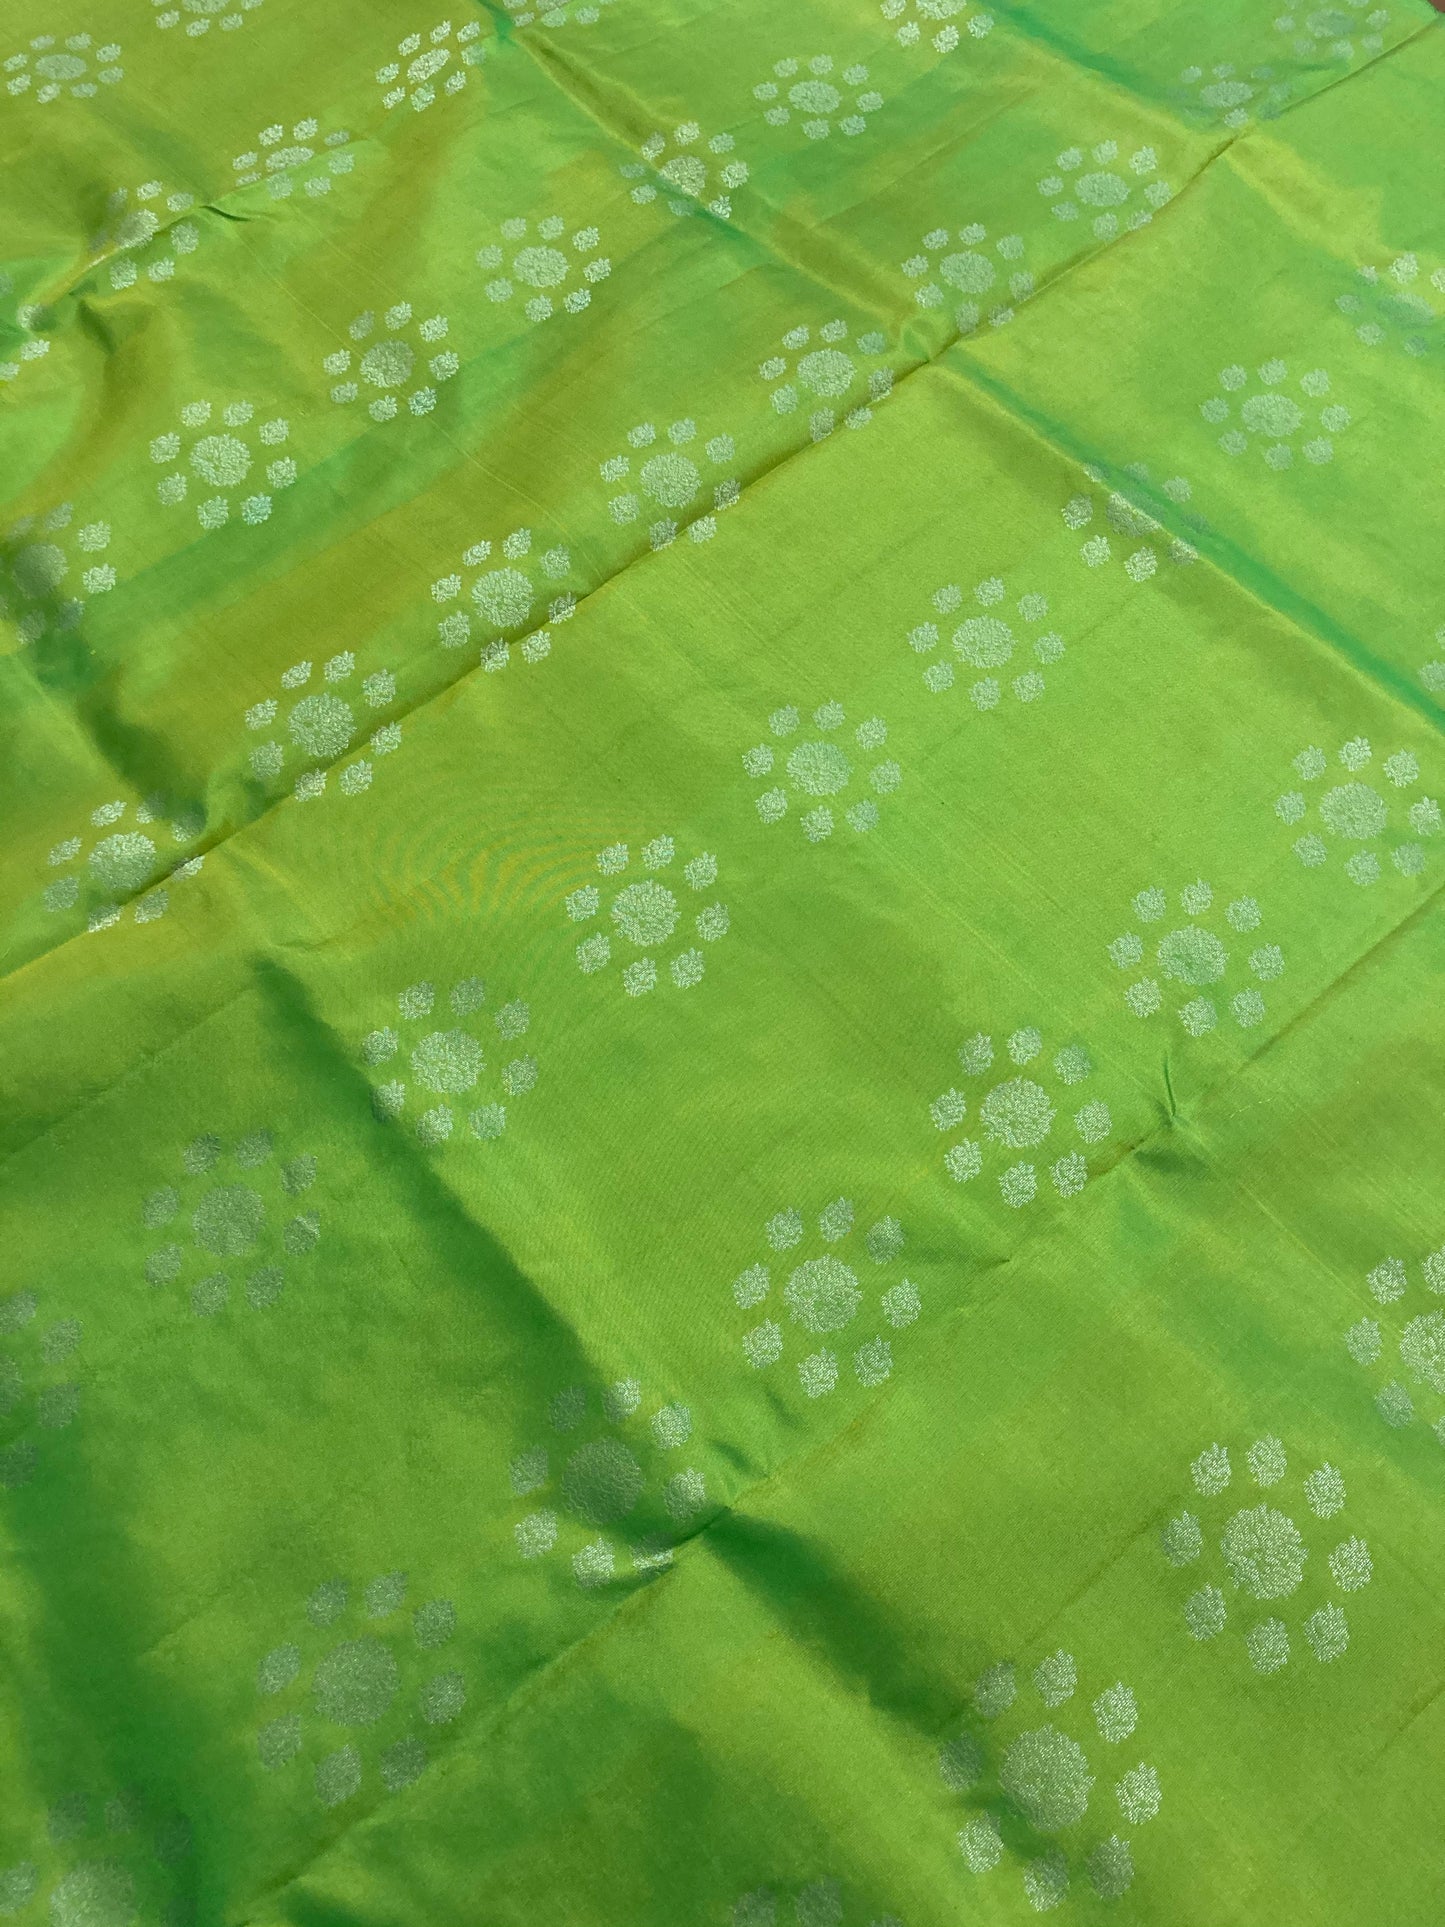 Southloom Handloom Pure Silk Kanchipuram Saree in Green and Aqua Blue